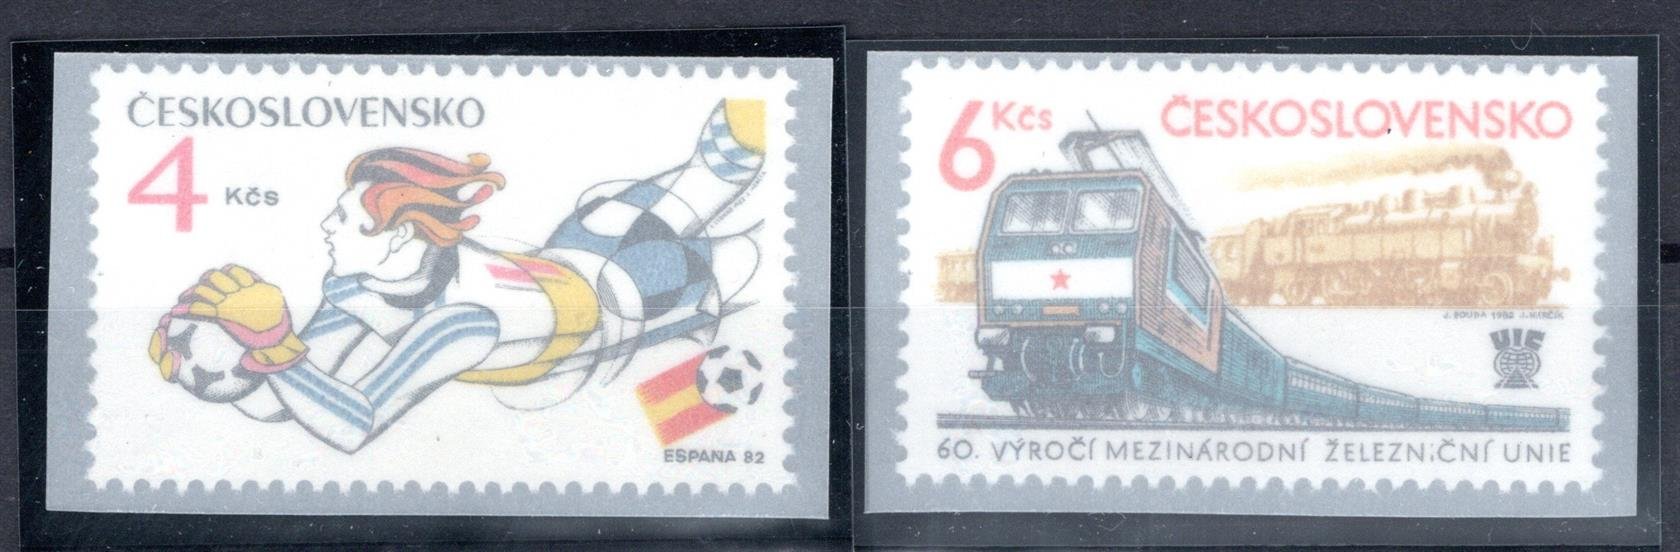 2523, 2530; Fotbal a Železnice,  Hledané známky na papíru FL 1 - bezvadný stav, obě zk. Vychron